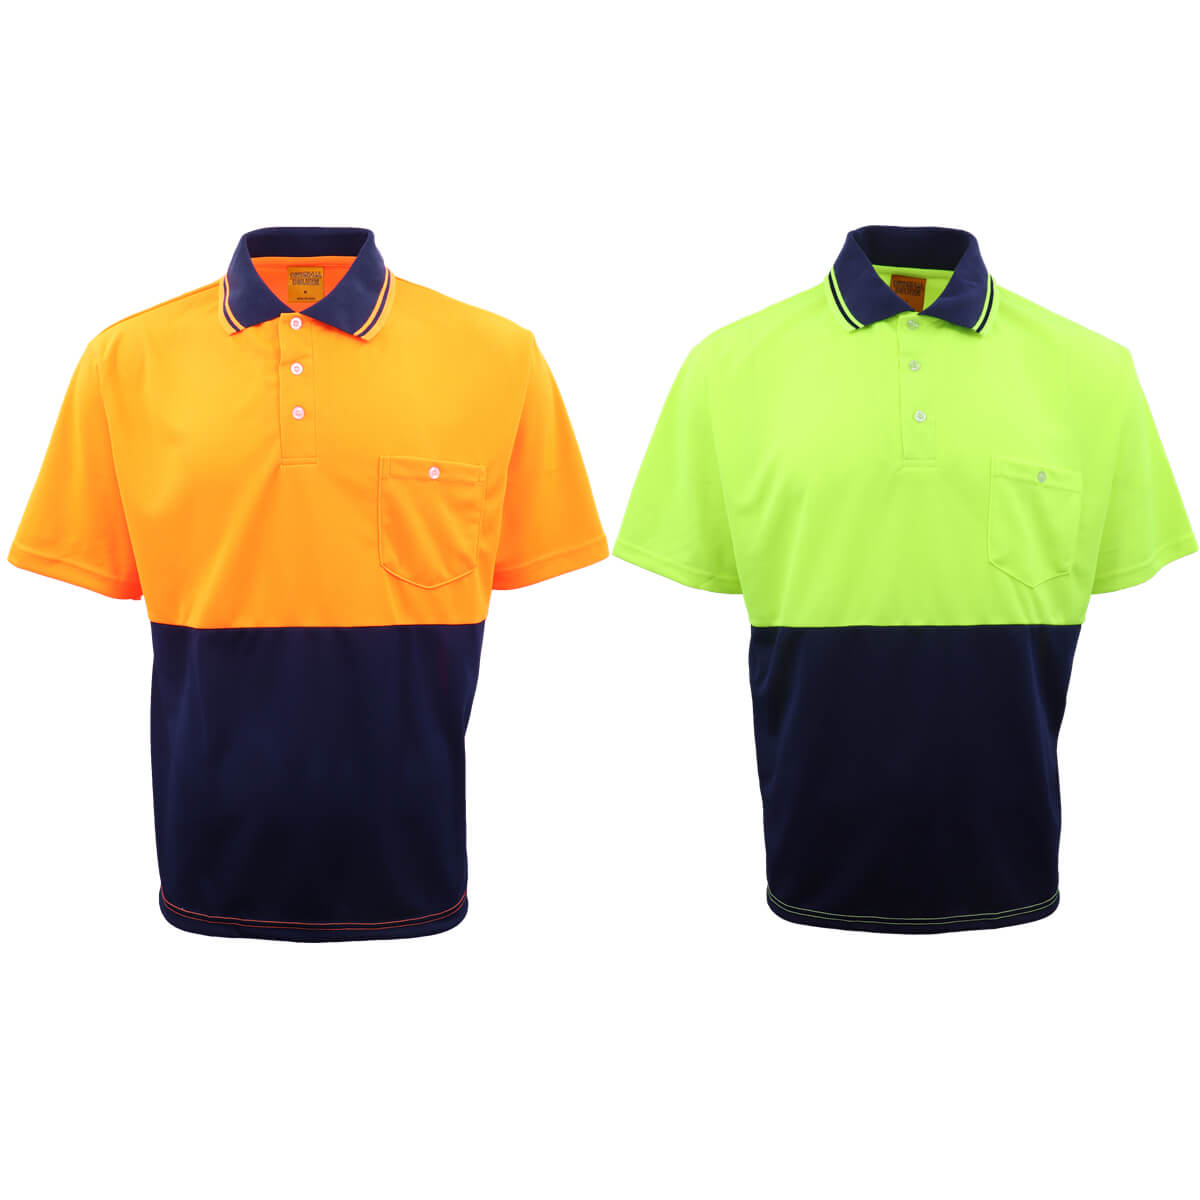 HI VIS Safety Workwear Fluro Polo Shirt Breathable Cool Dry Short Sleeve Top Tee - Zmart Australia